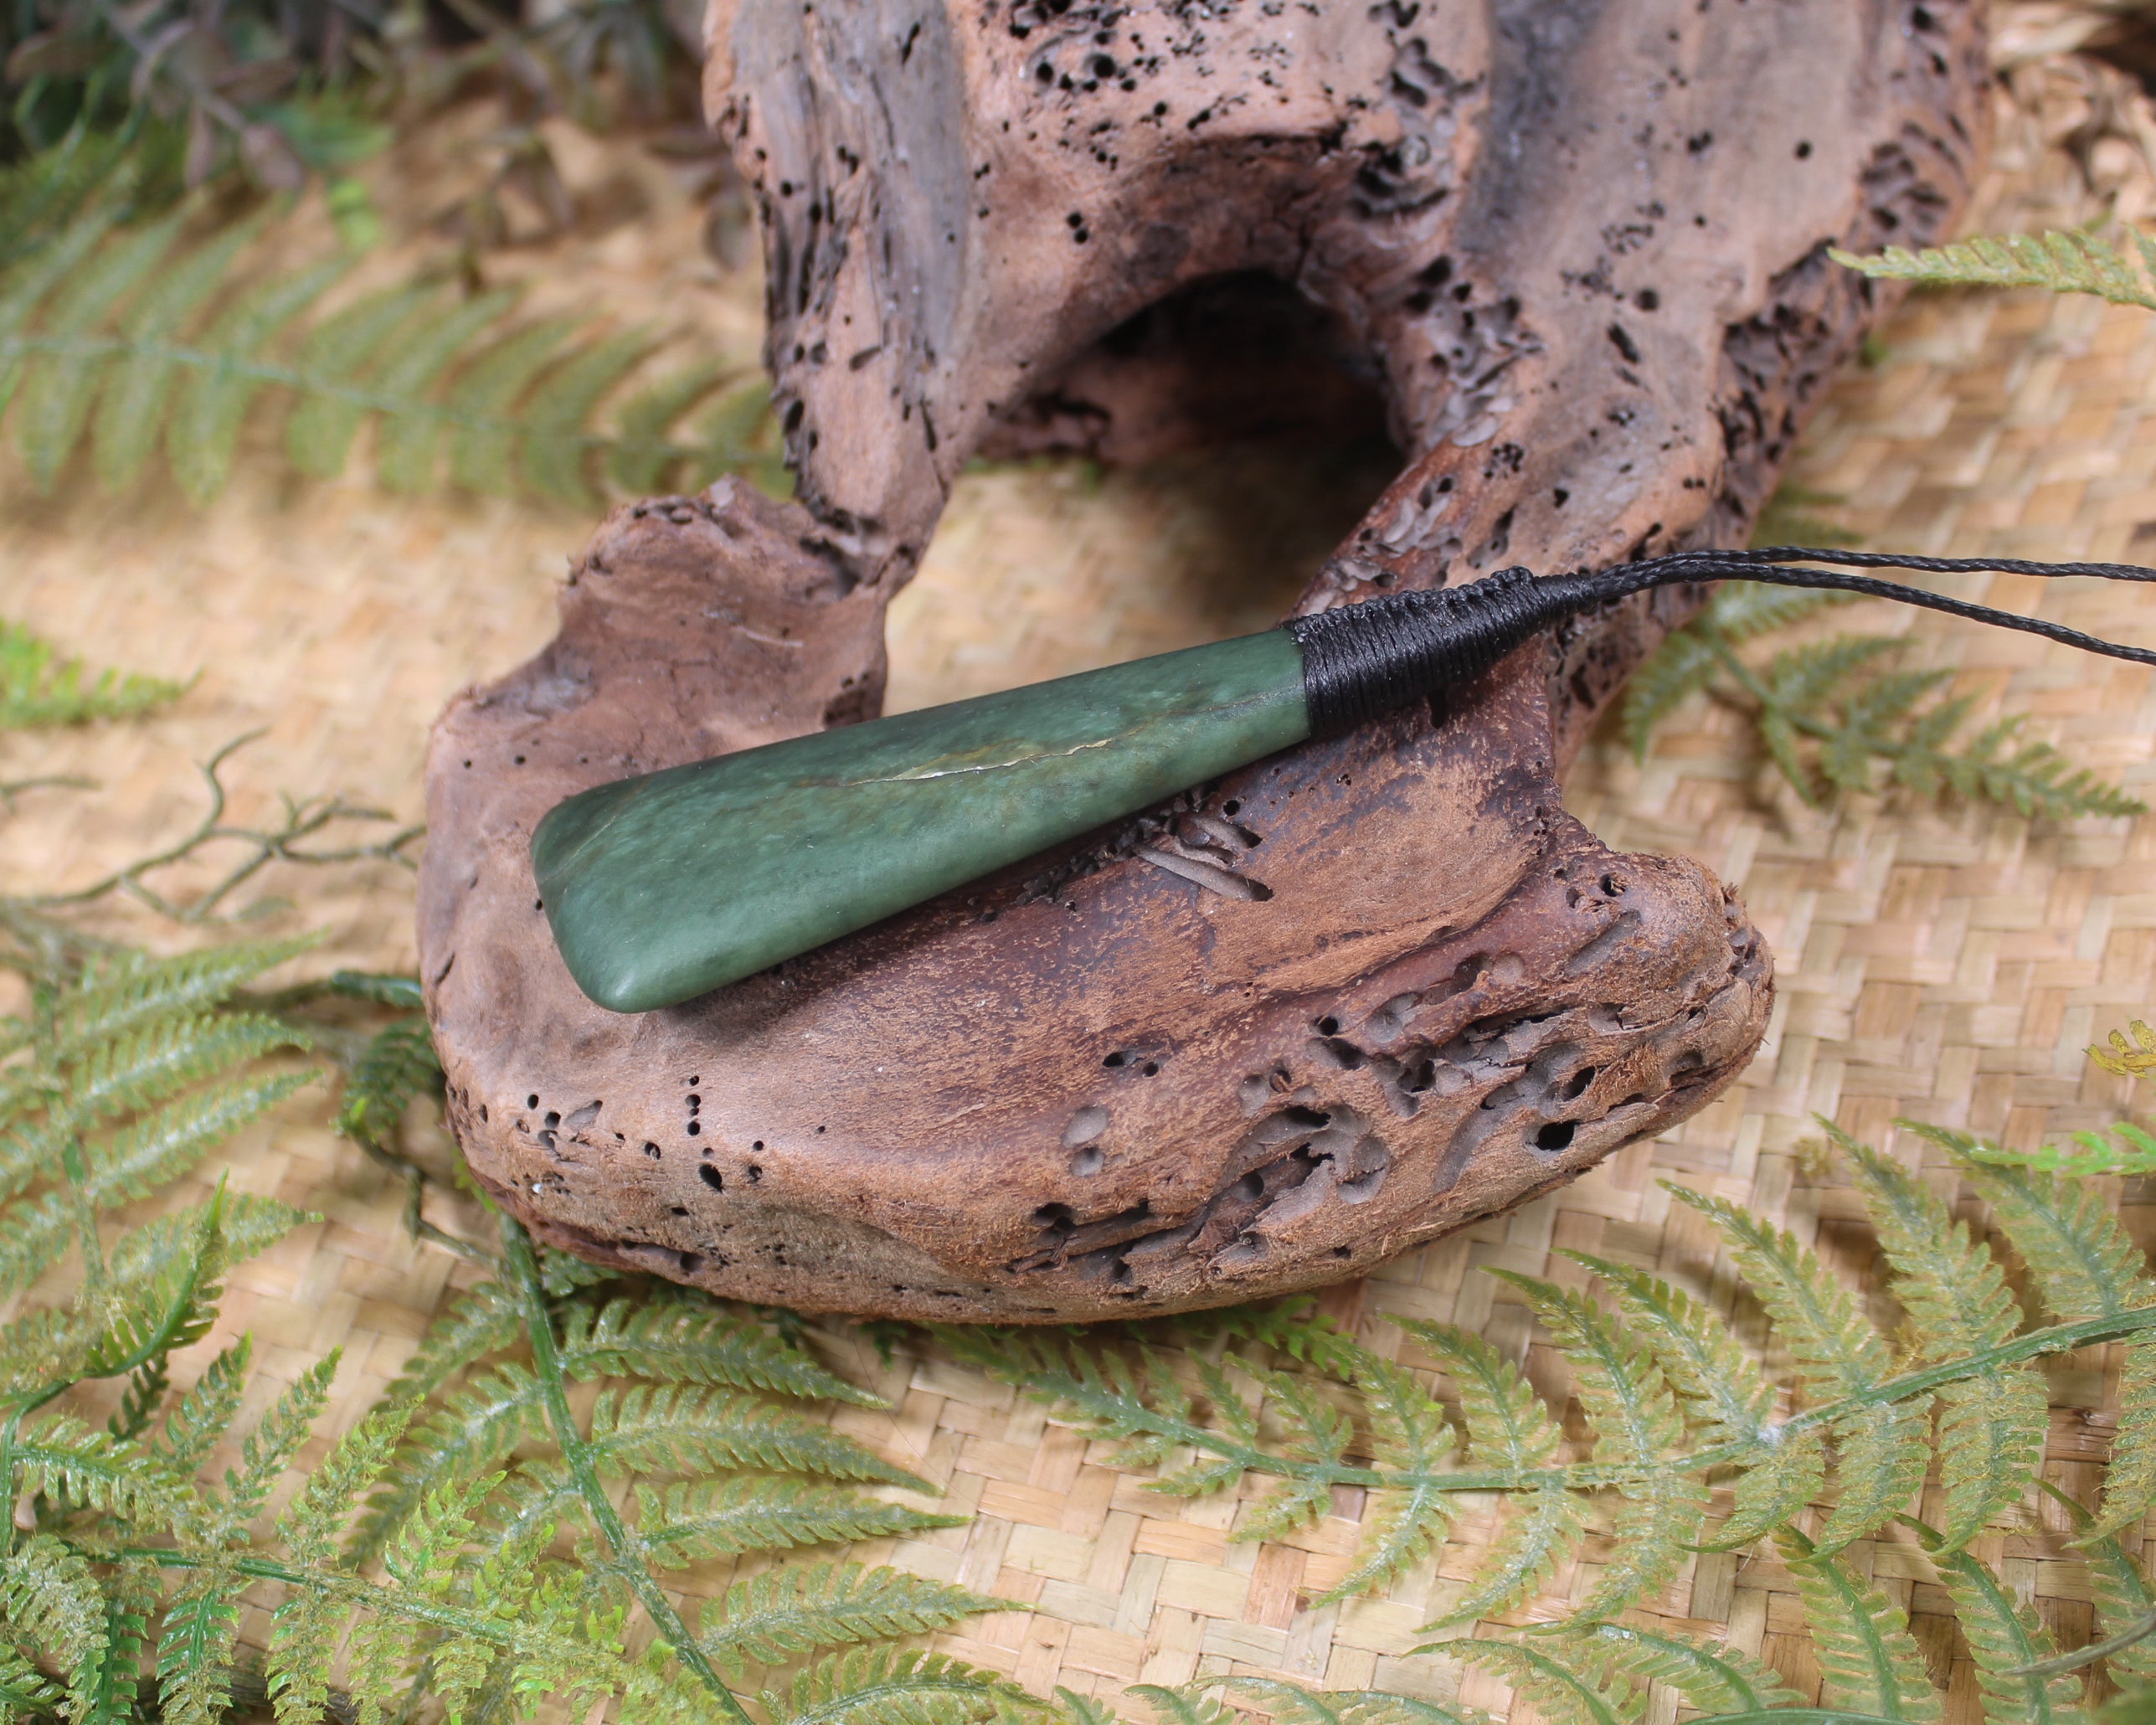 Toki or Adze Pendant carved from Kawakawa Pounamu - NZ Greenstone